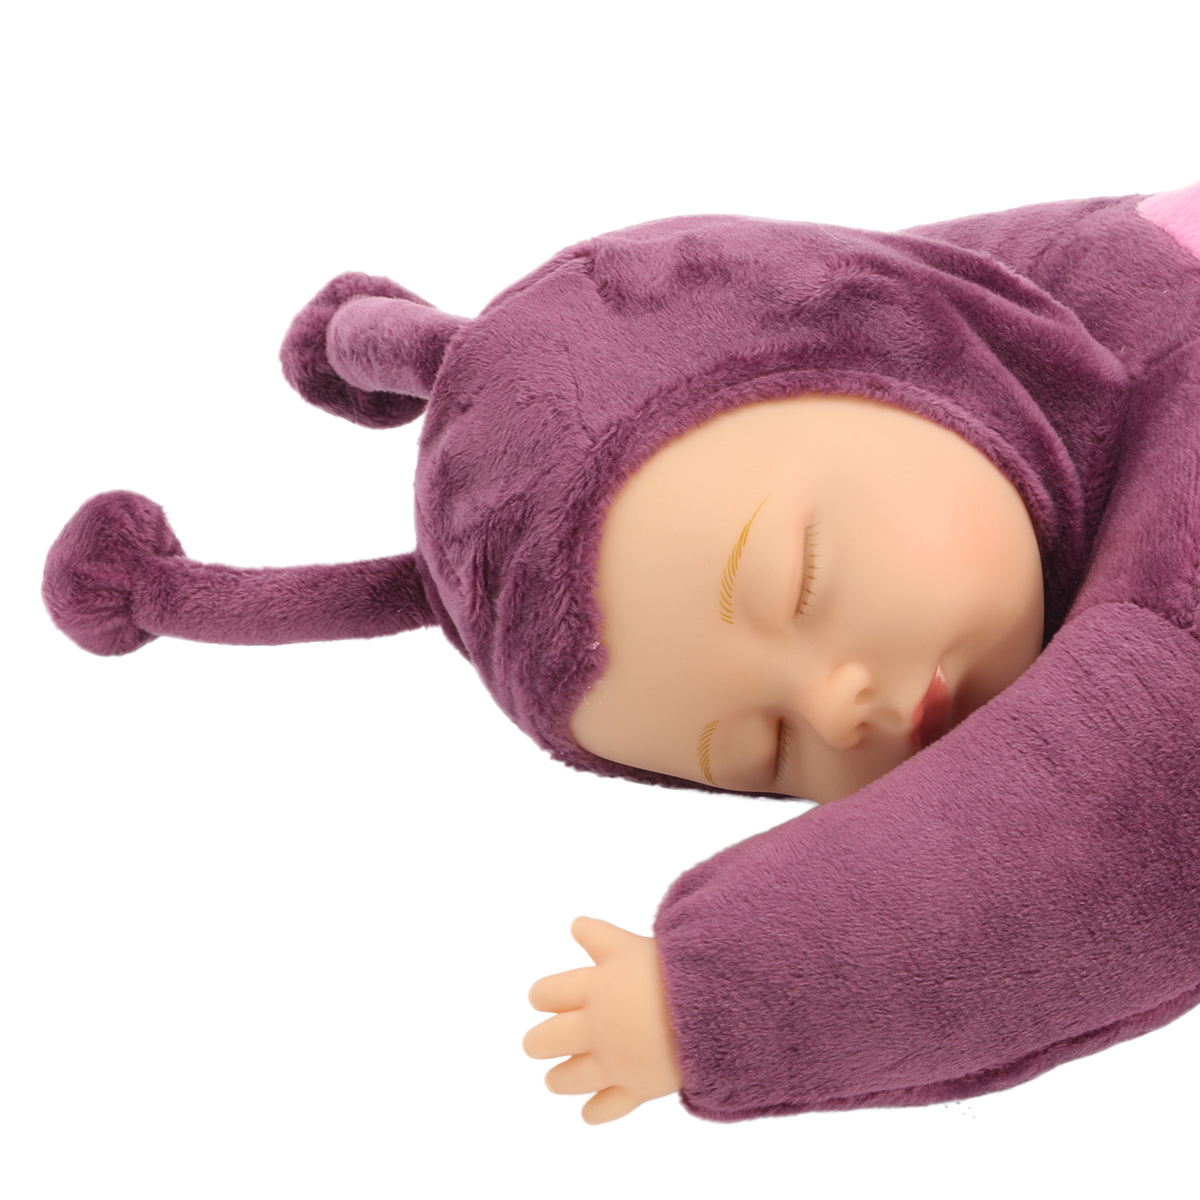 12quot-Handmade-Sleeping-Reborn-Dolls-Ladybird-Full-Soft-Silicone-Lifelike-Green-Stuffed-Plush-Toy-1411431